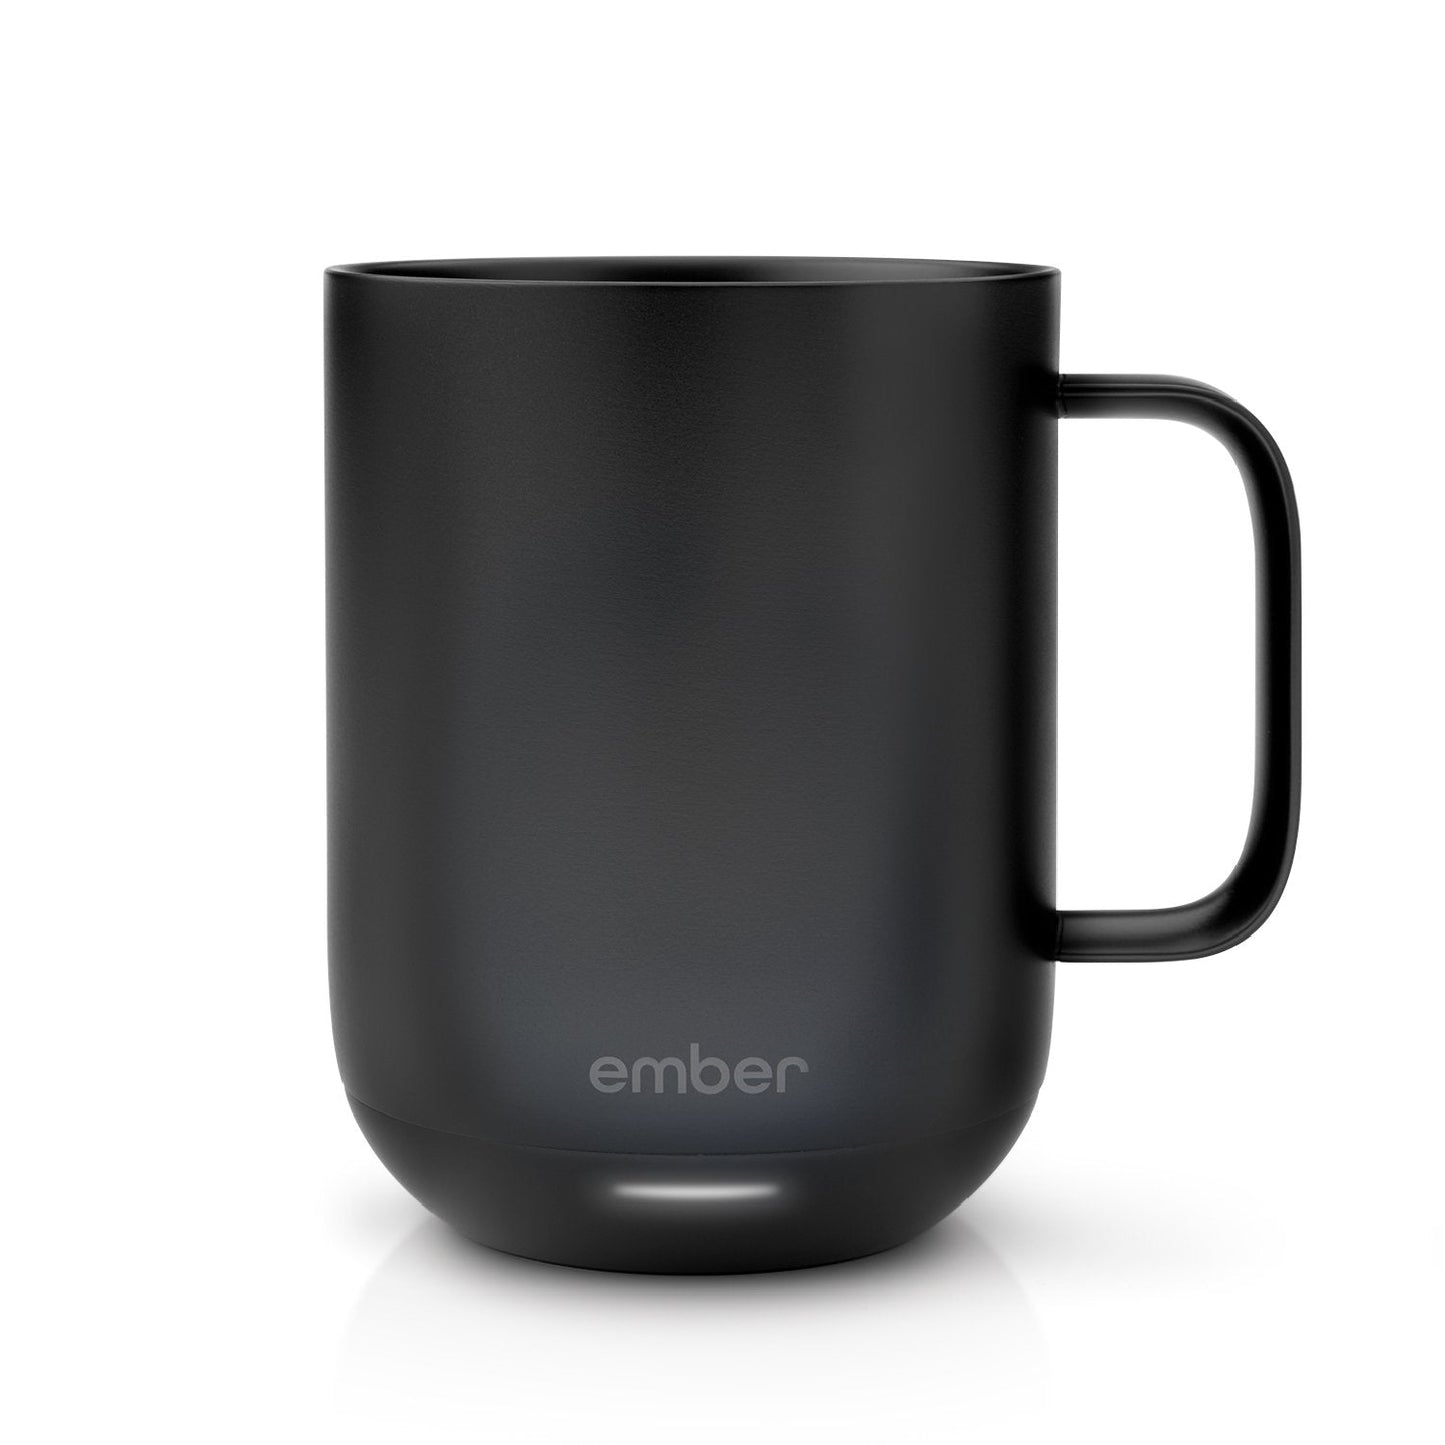 Ember Mug 2  Mugs, Samsung galaxy s5, Google nexus 6p